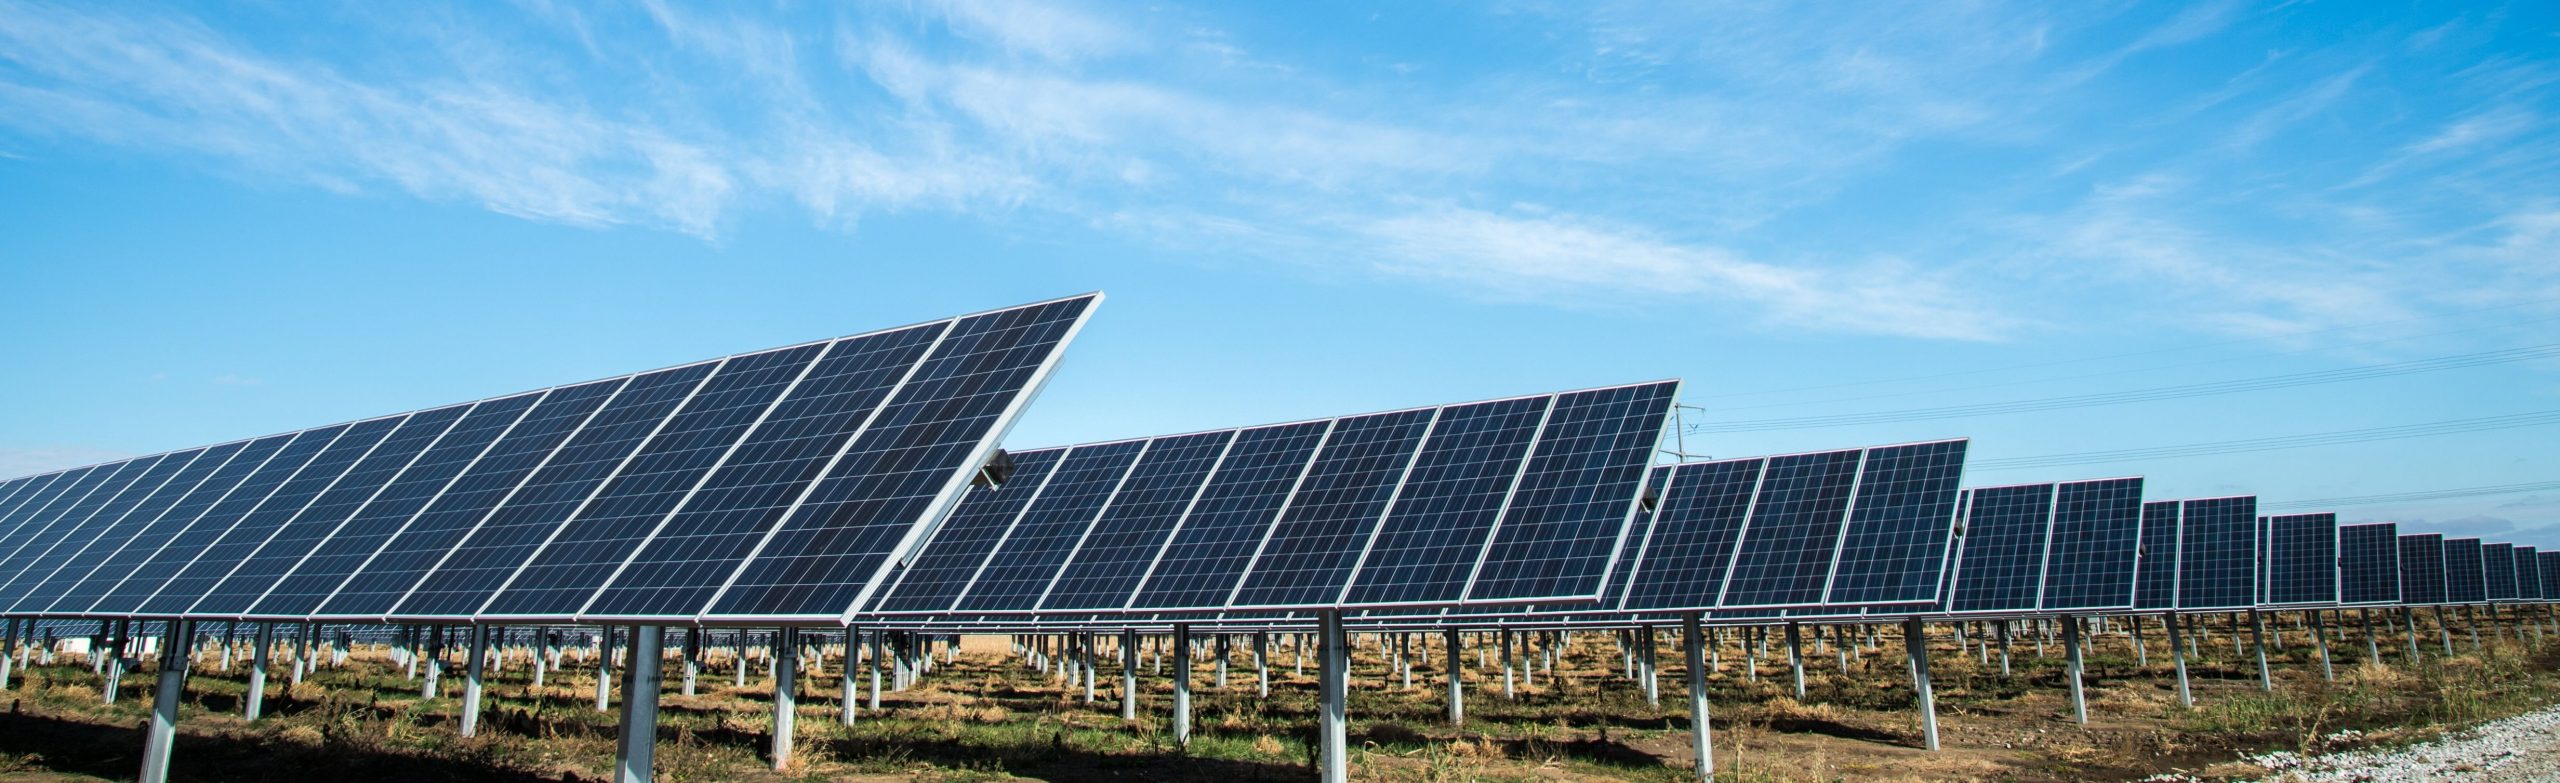 AleaSoft - Solar panels